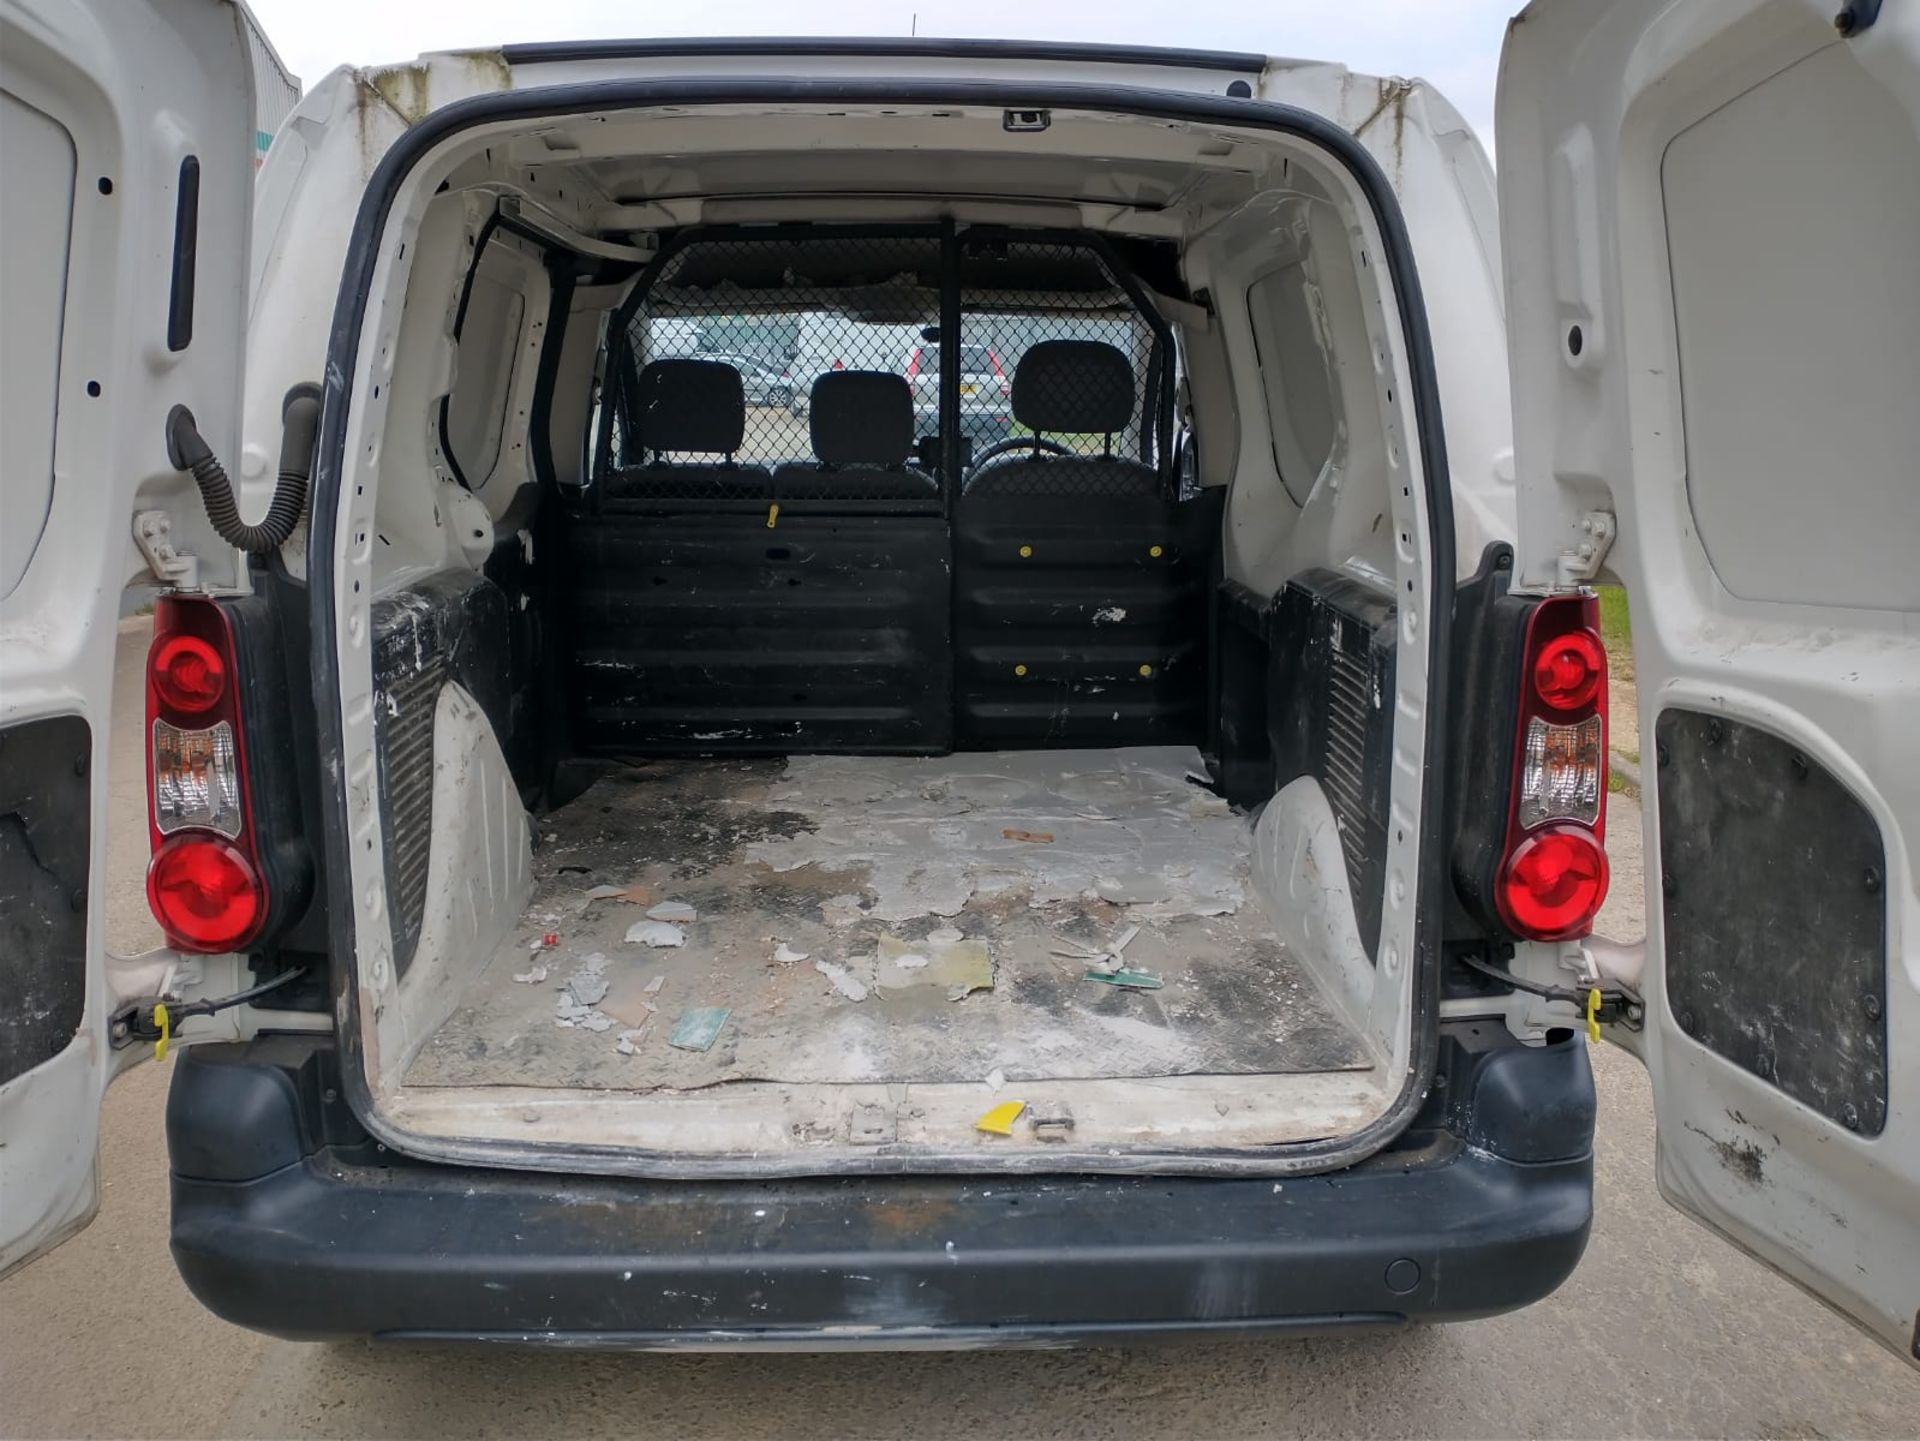 2015 Peugeot Partner Panel Van - CL505 - Location: Corby - Image 4 of 15